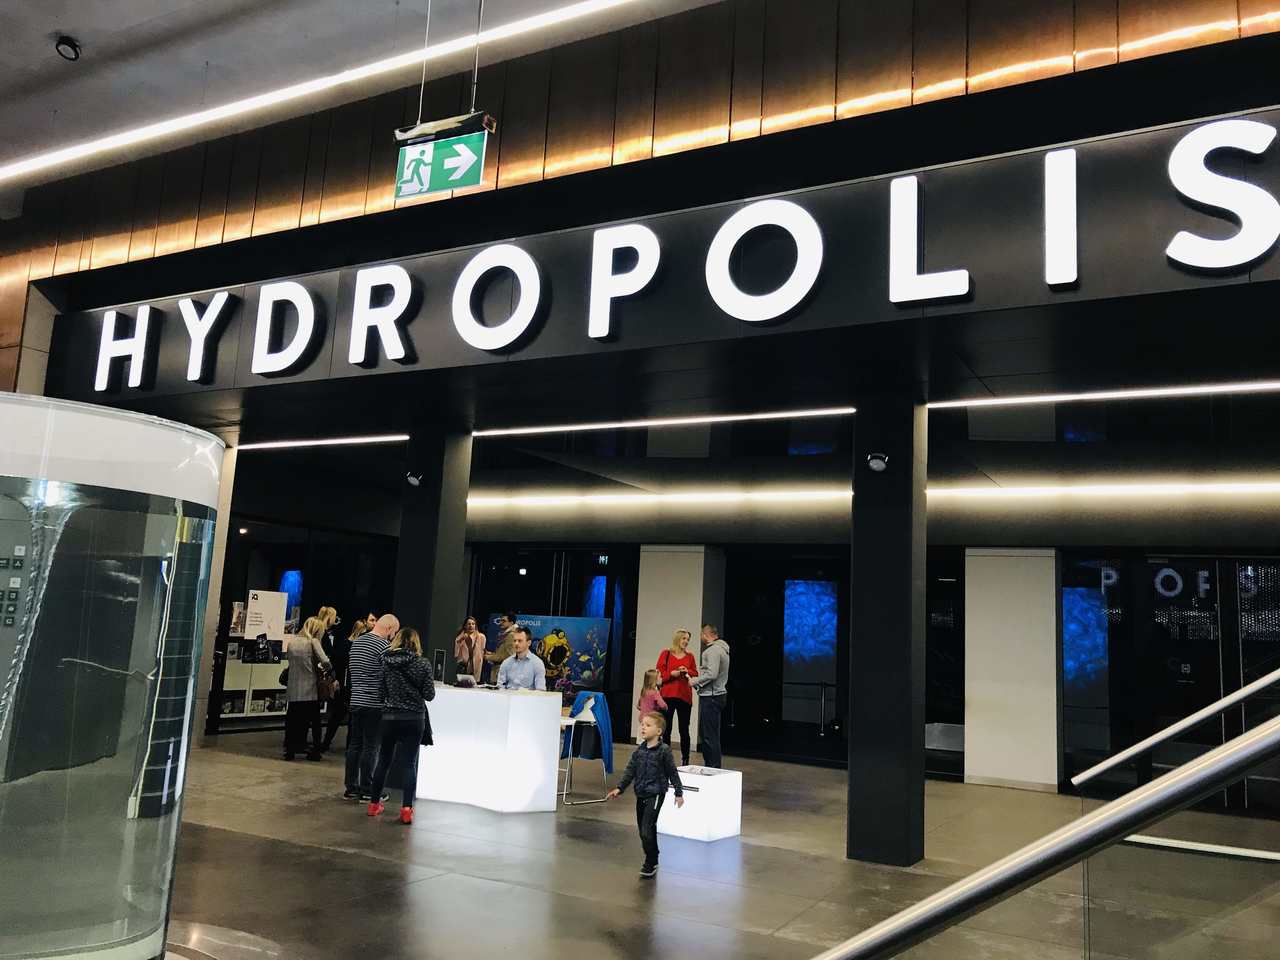 Hydropolis we Wrocławiu